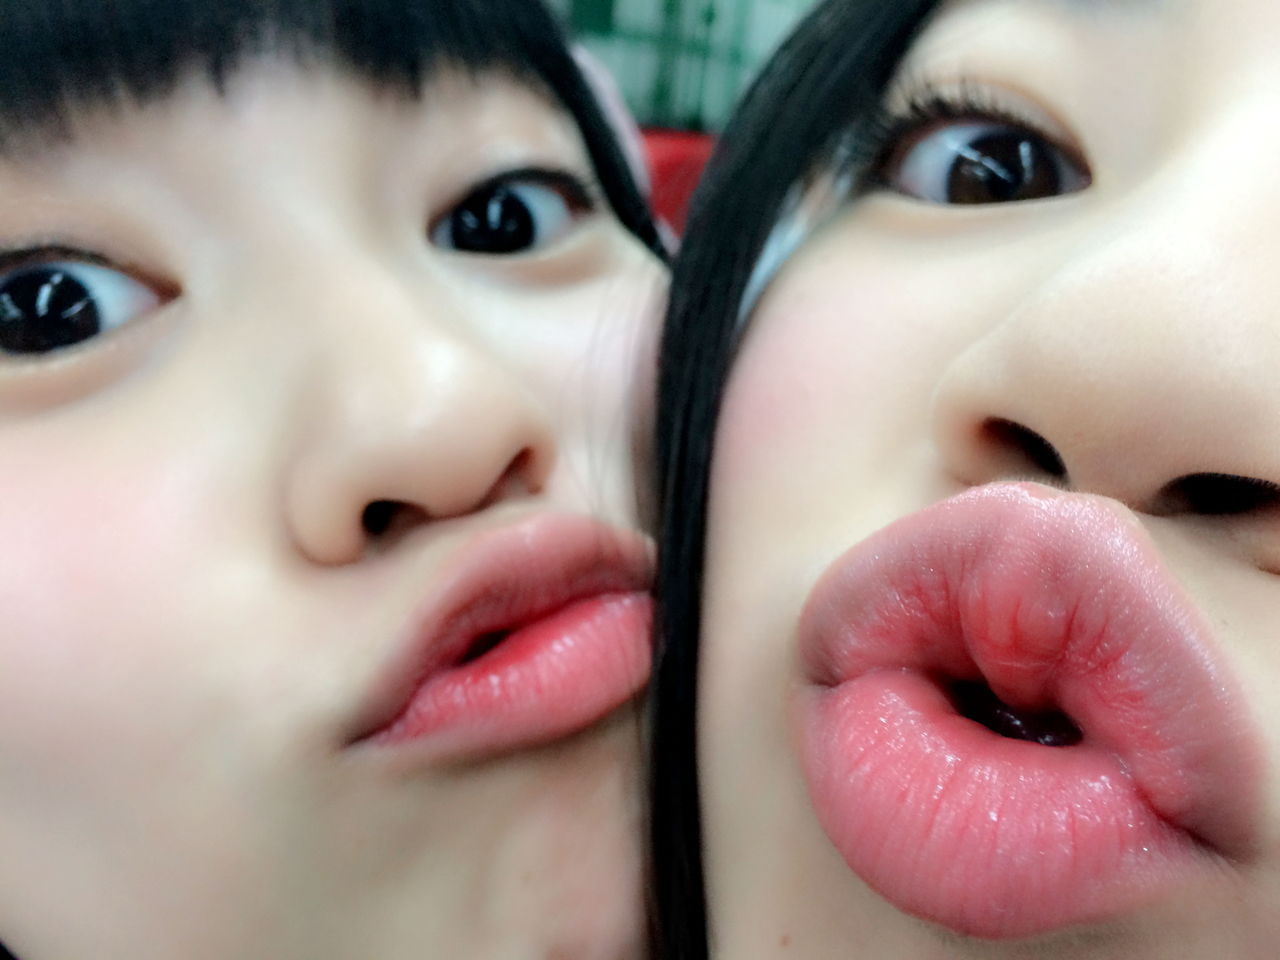 Ske48 北川綾巴のキス顔写メ画質良すぎｗｗｗｗｗｗ Akb48まとめ物語